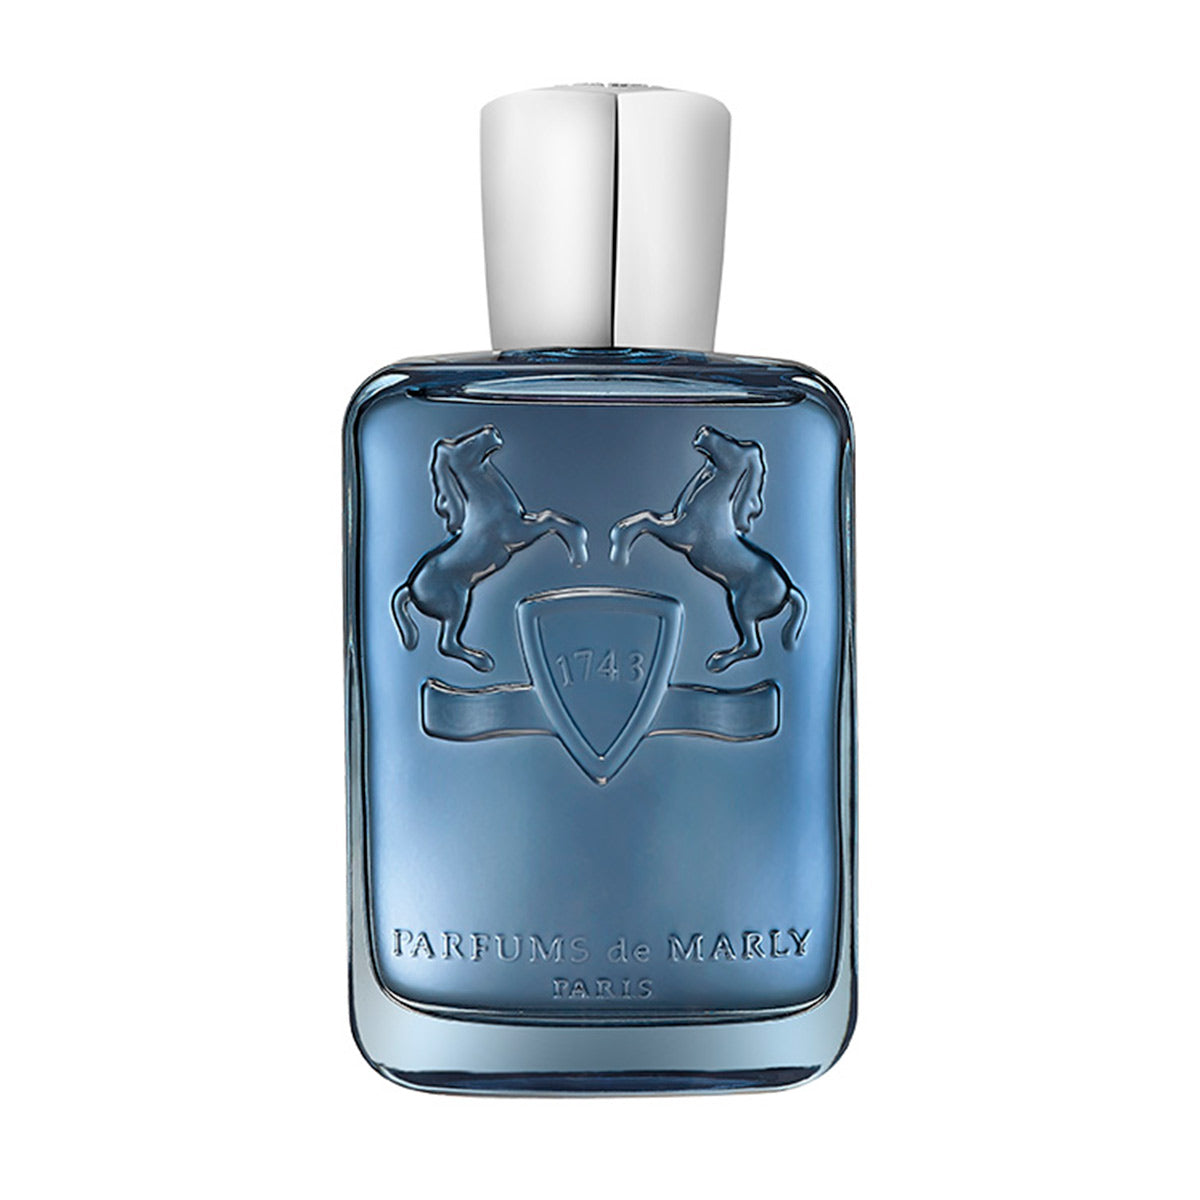 Sedley - Parfums De Marly - EDP 125 ml